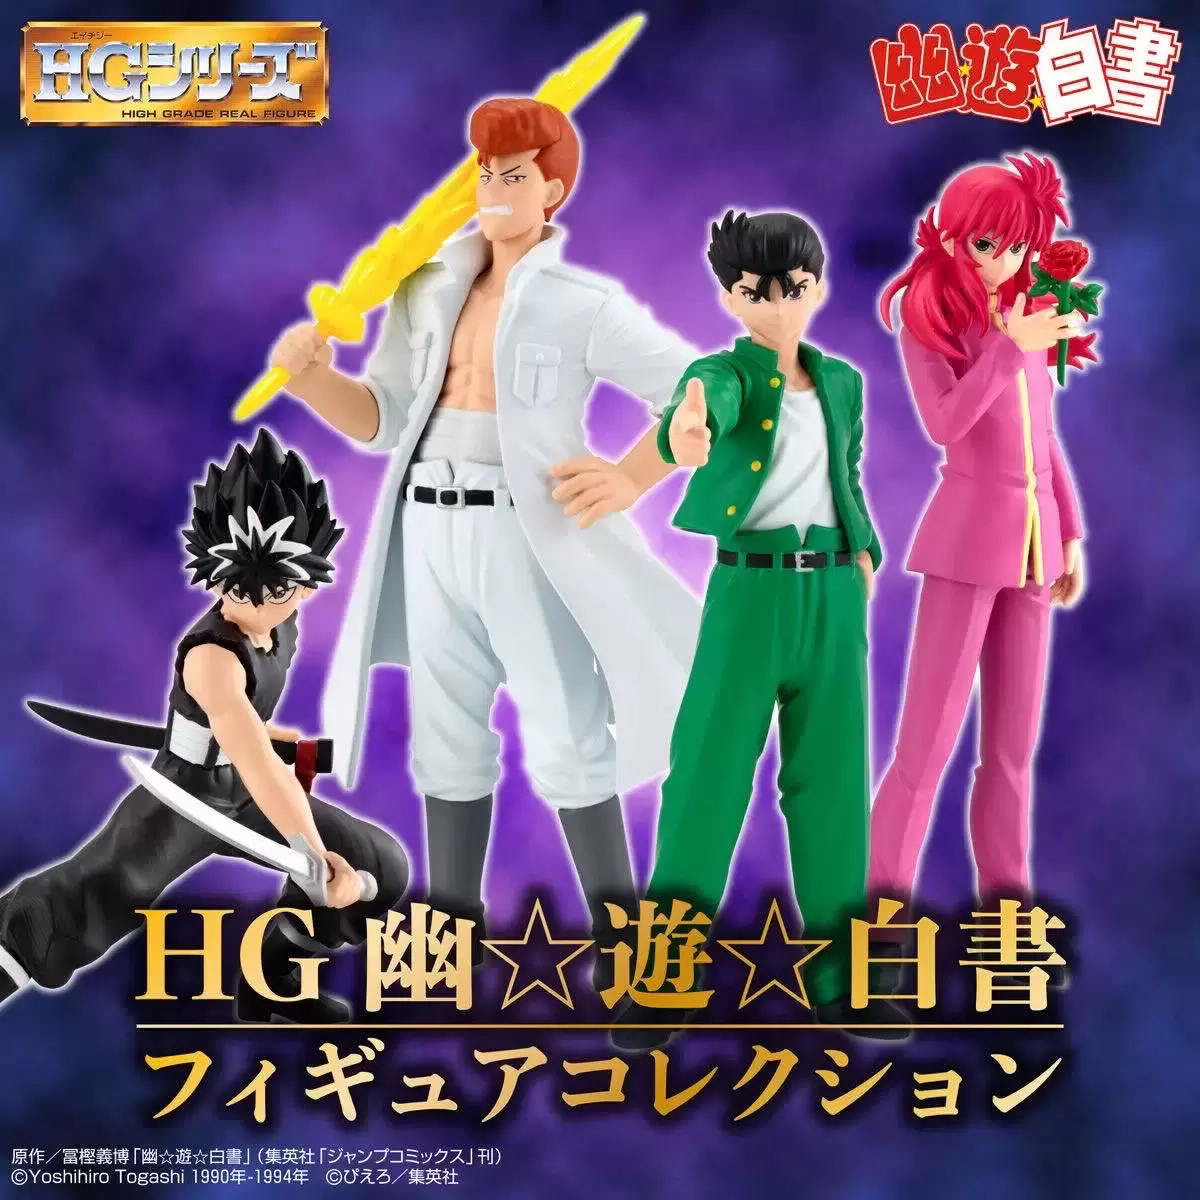 Anime Heroes - Bandai - HG YU YU Hakusho set